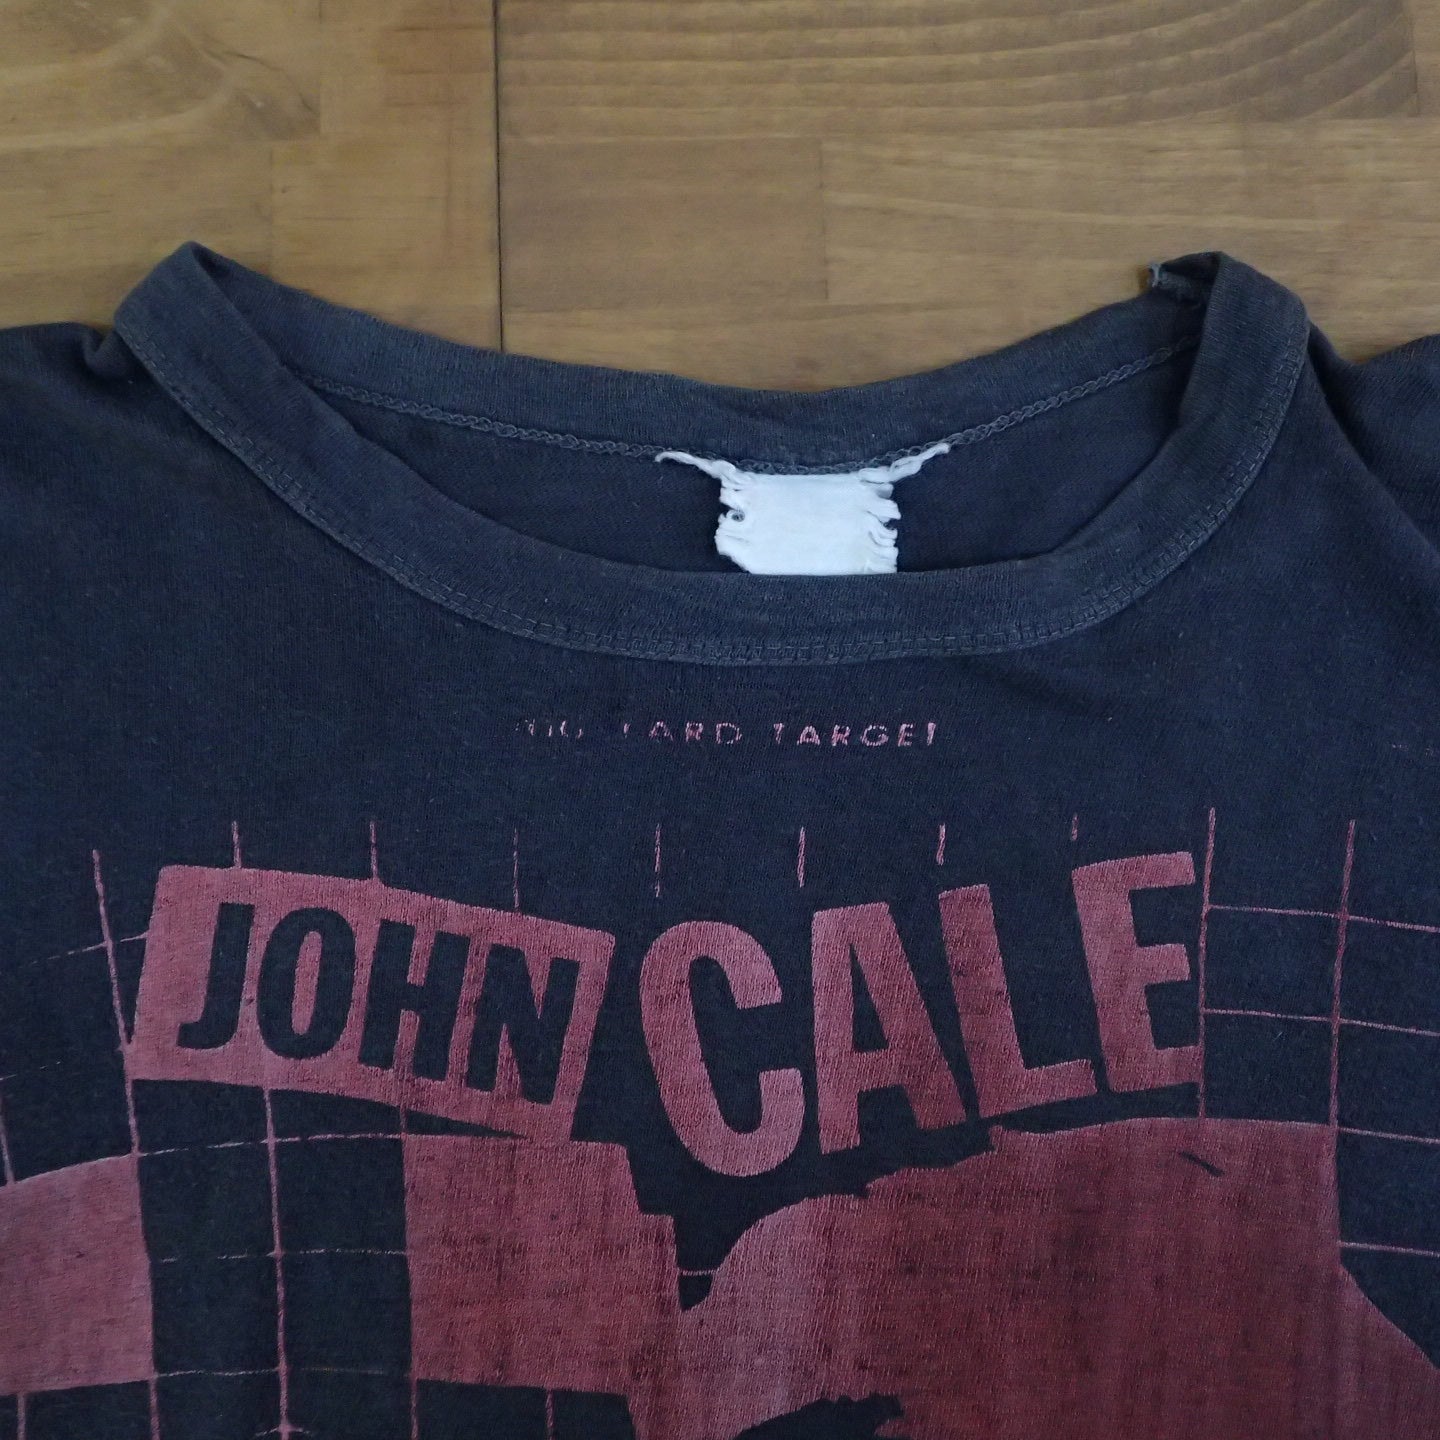 70s John Cale T-shirt "Live at CBGB Tee"